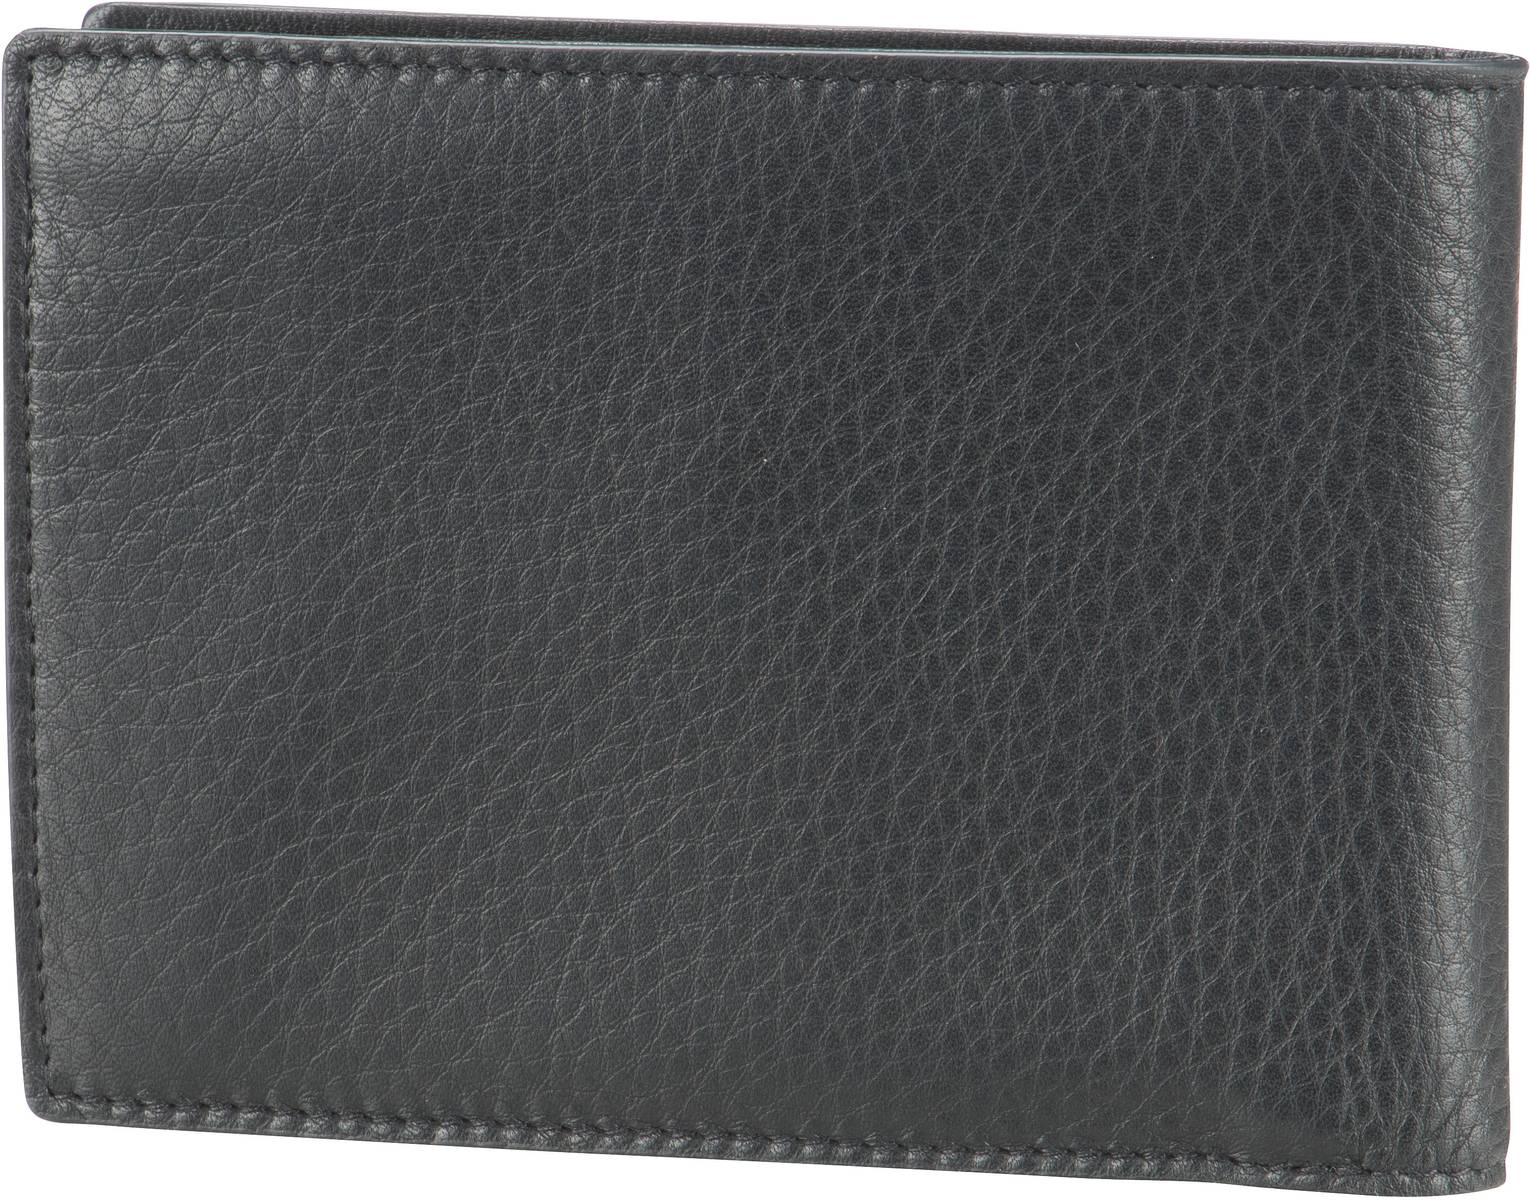 Porsche Design Business Wallet 9902 - Black